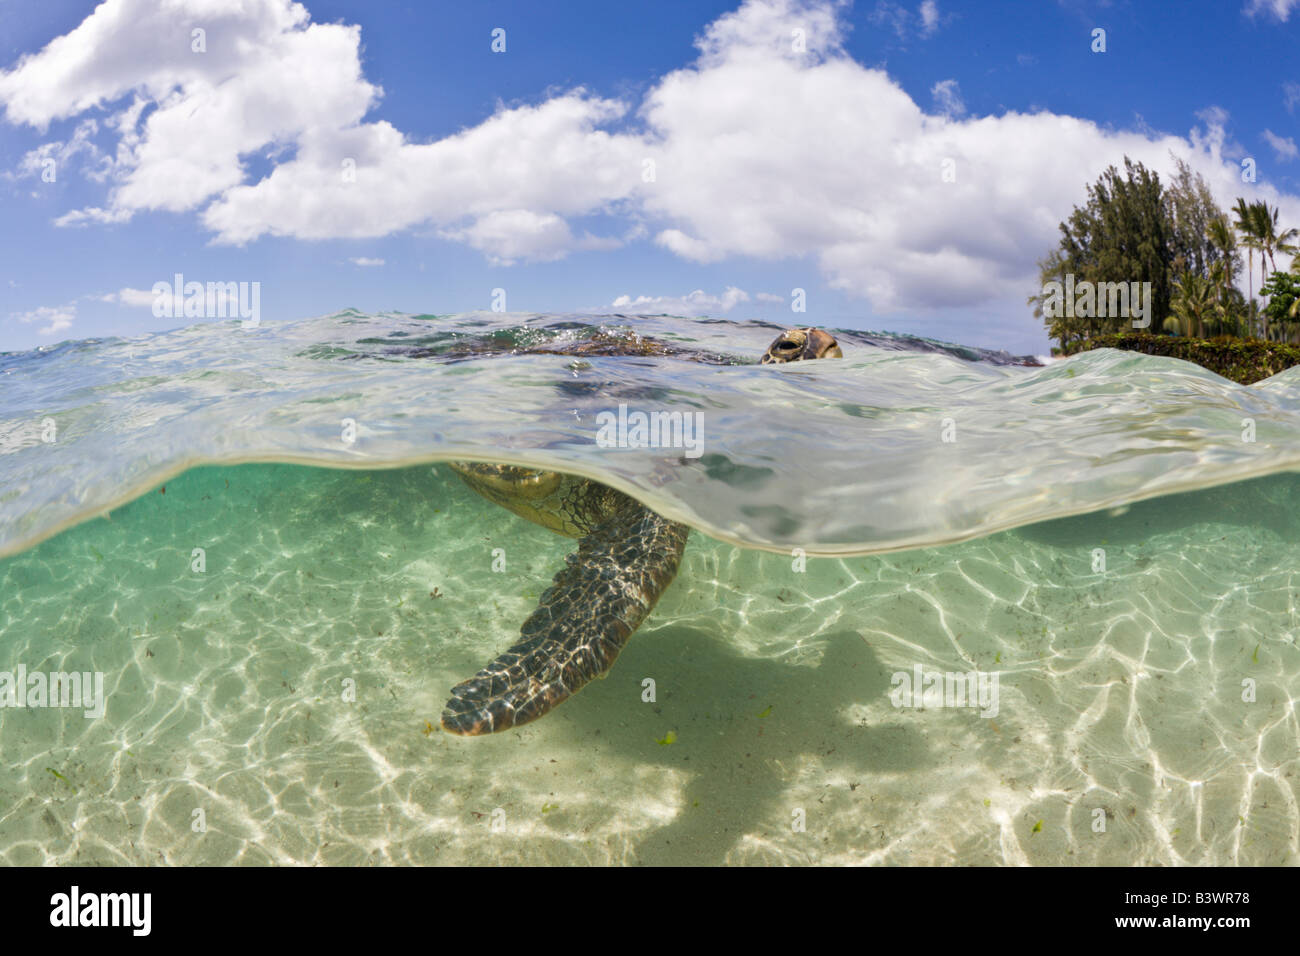 Grüne Schildkröte atmen in Wasser Oberfläche Chelonia Mydas Oahu Pazifik Hawaii USA Stockfoto